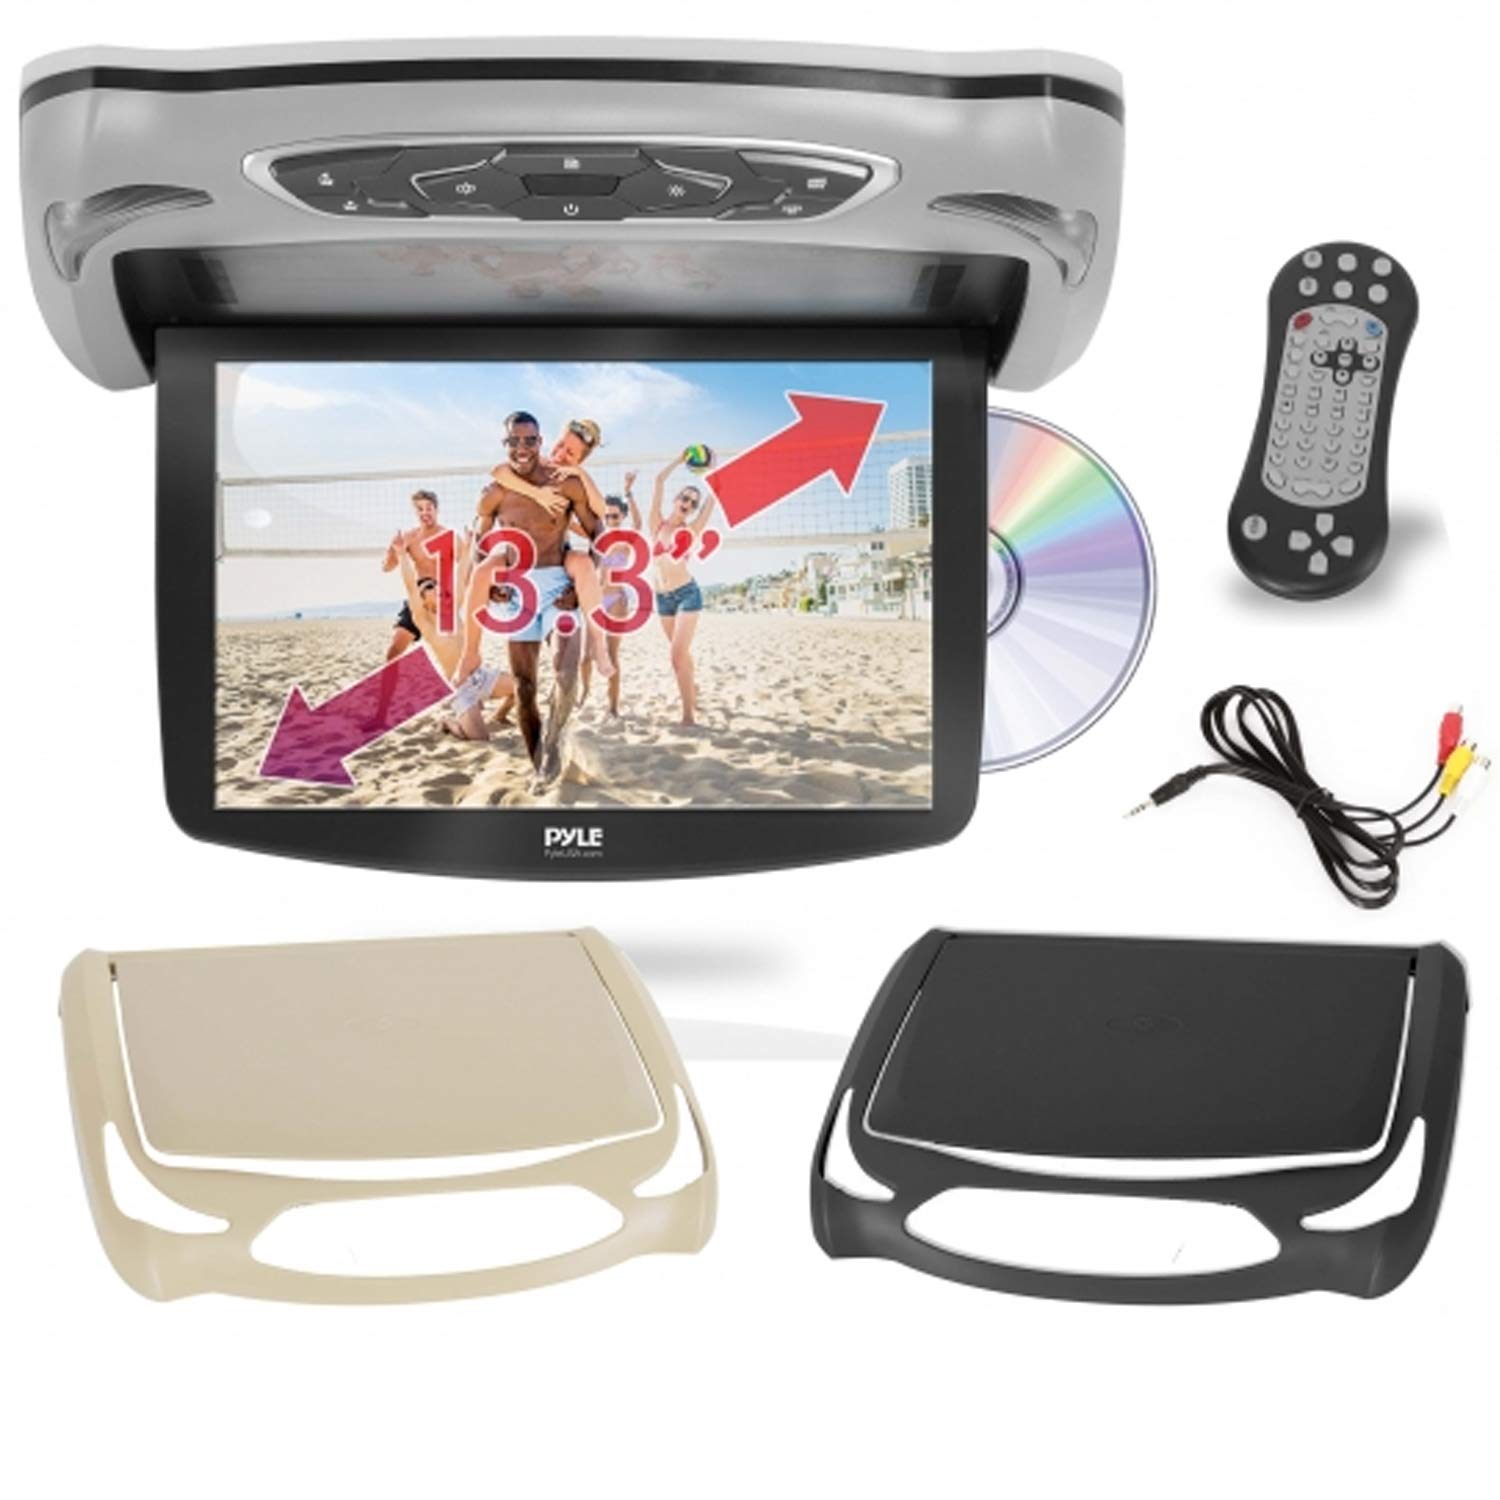 Pyle 汽车车顶安装 DVD 播放器显示器 13.3 英寸车辆下翻式顶置屏幕 - HDMI SD USB 卡输入，带内置红外发射器，适用于无线红外耳机，3 种颜色 - PLRD146